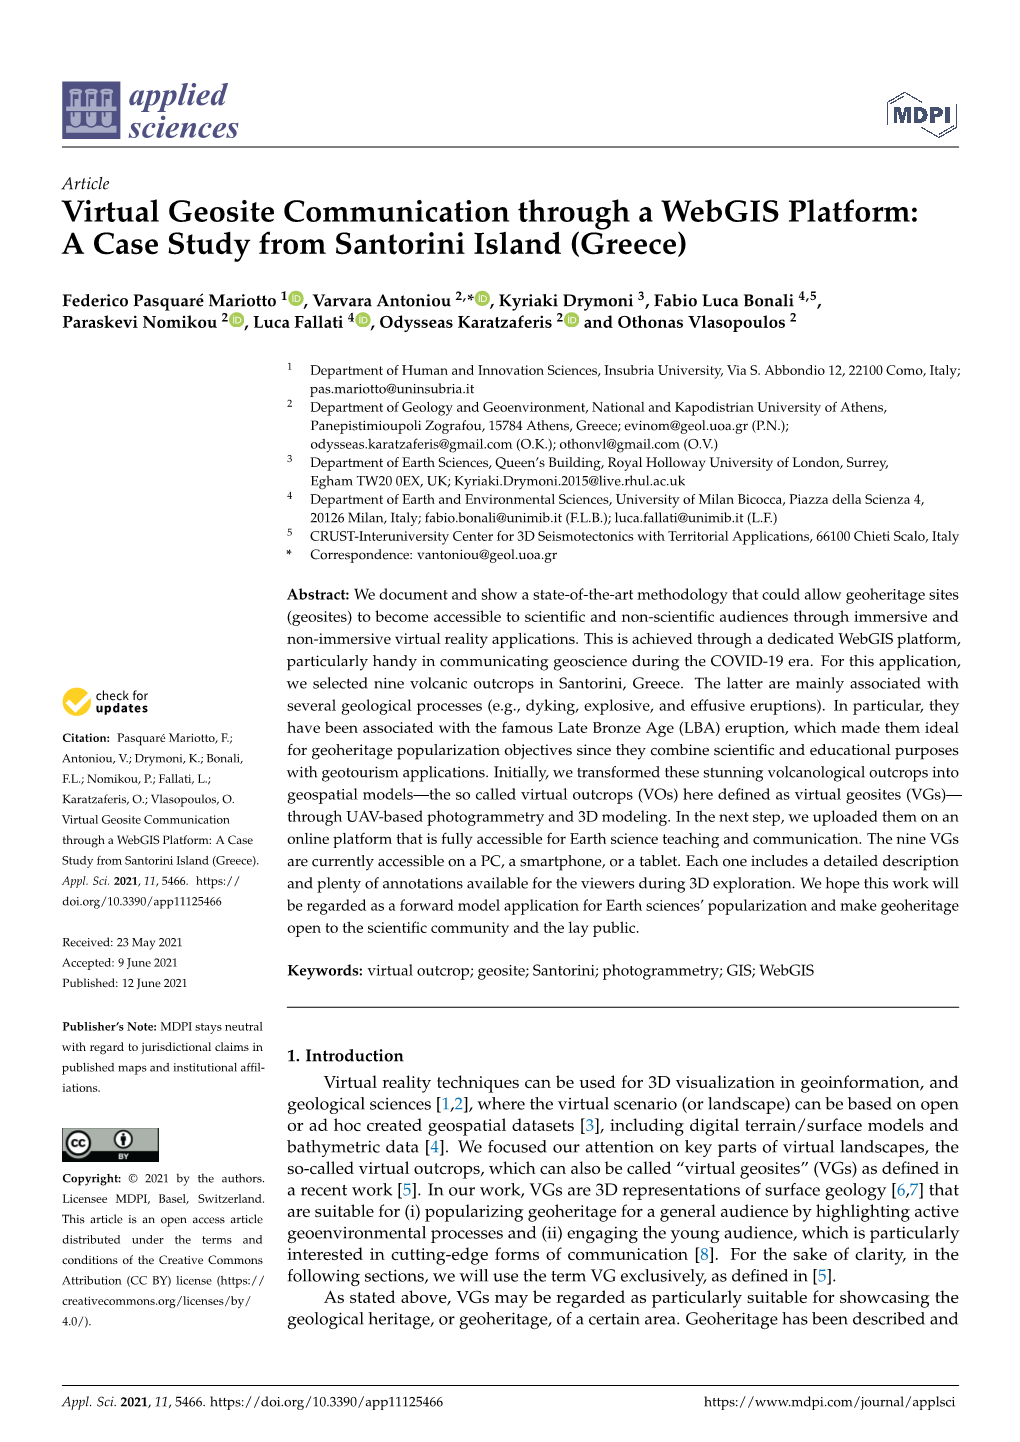 Virtual Geosite Communication Through a Webgis Platform: a Case Study from Santorini Island (Greece)